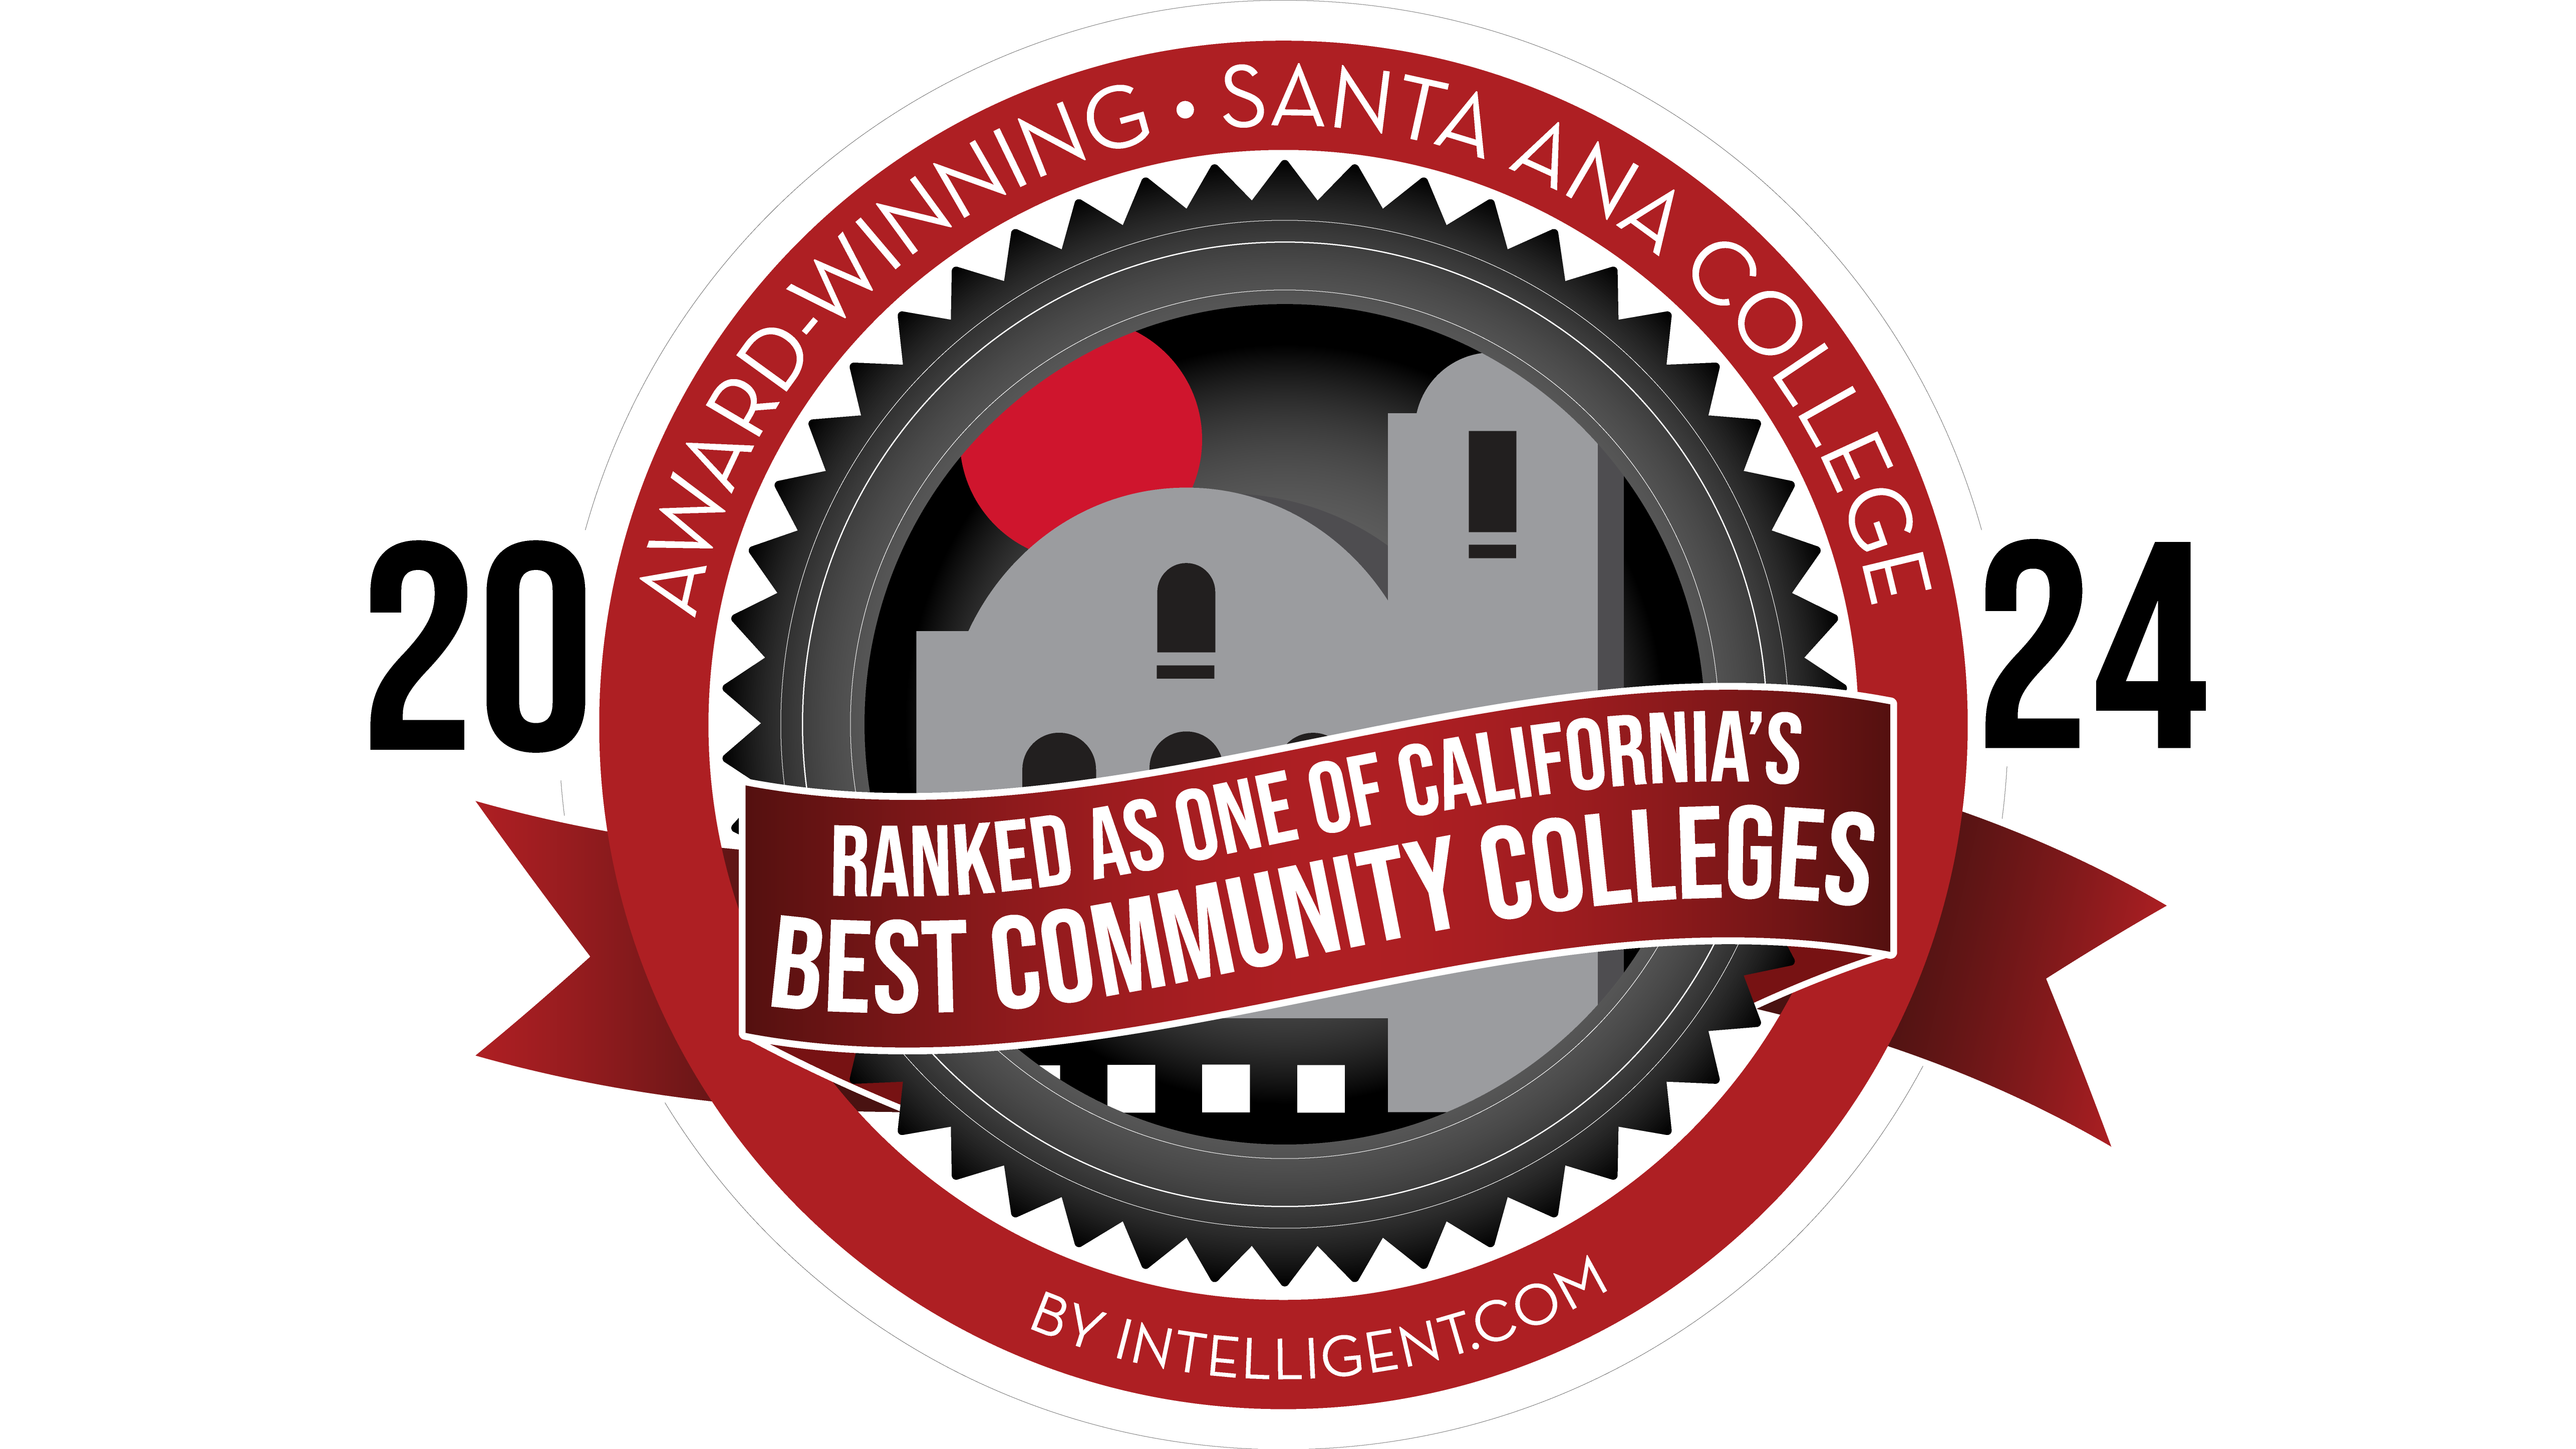 Best community college award